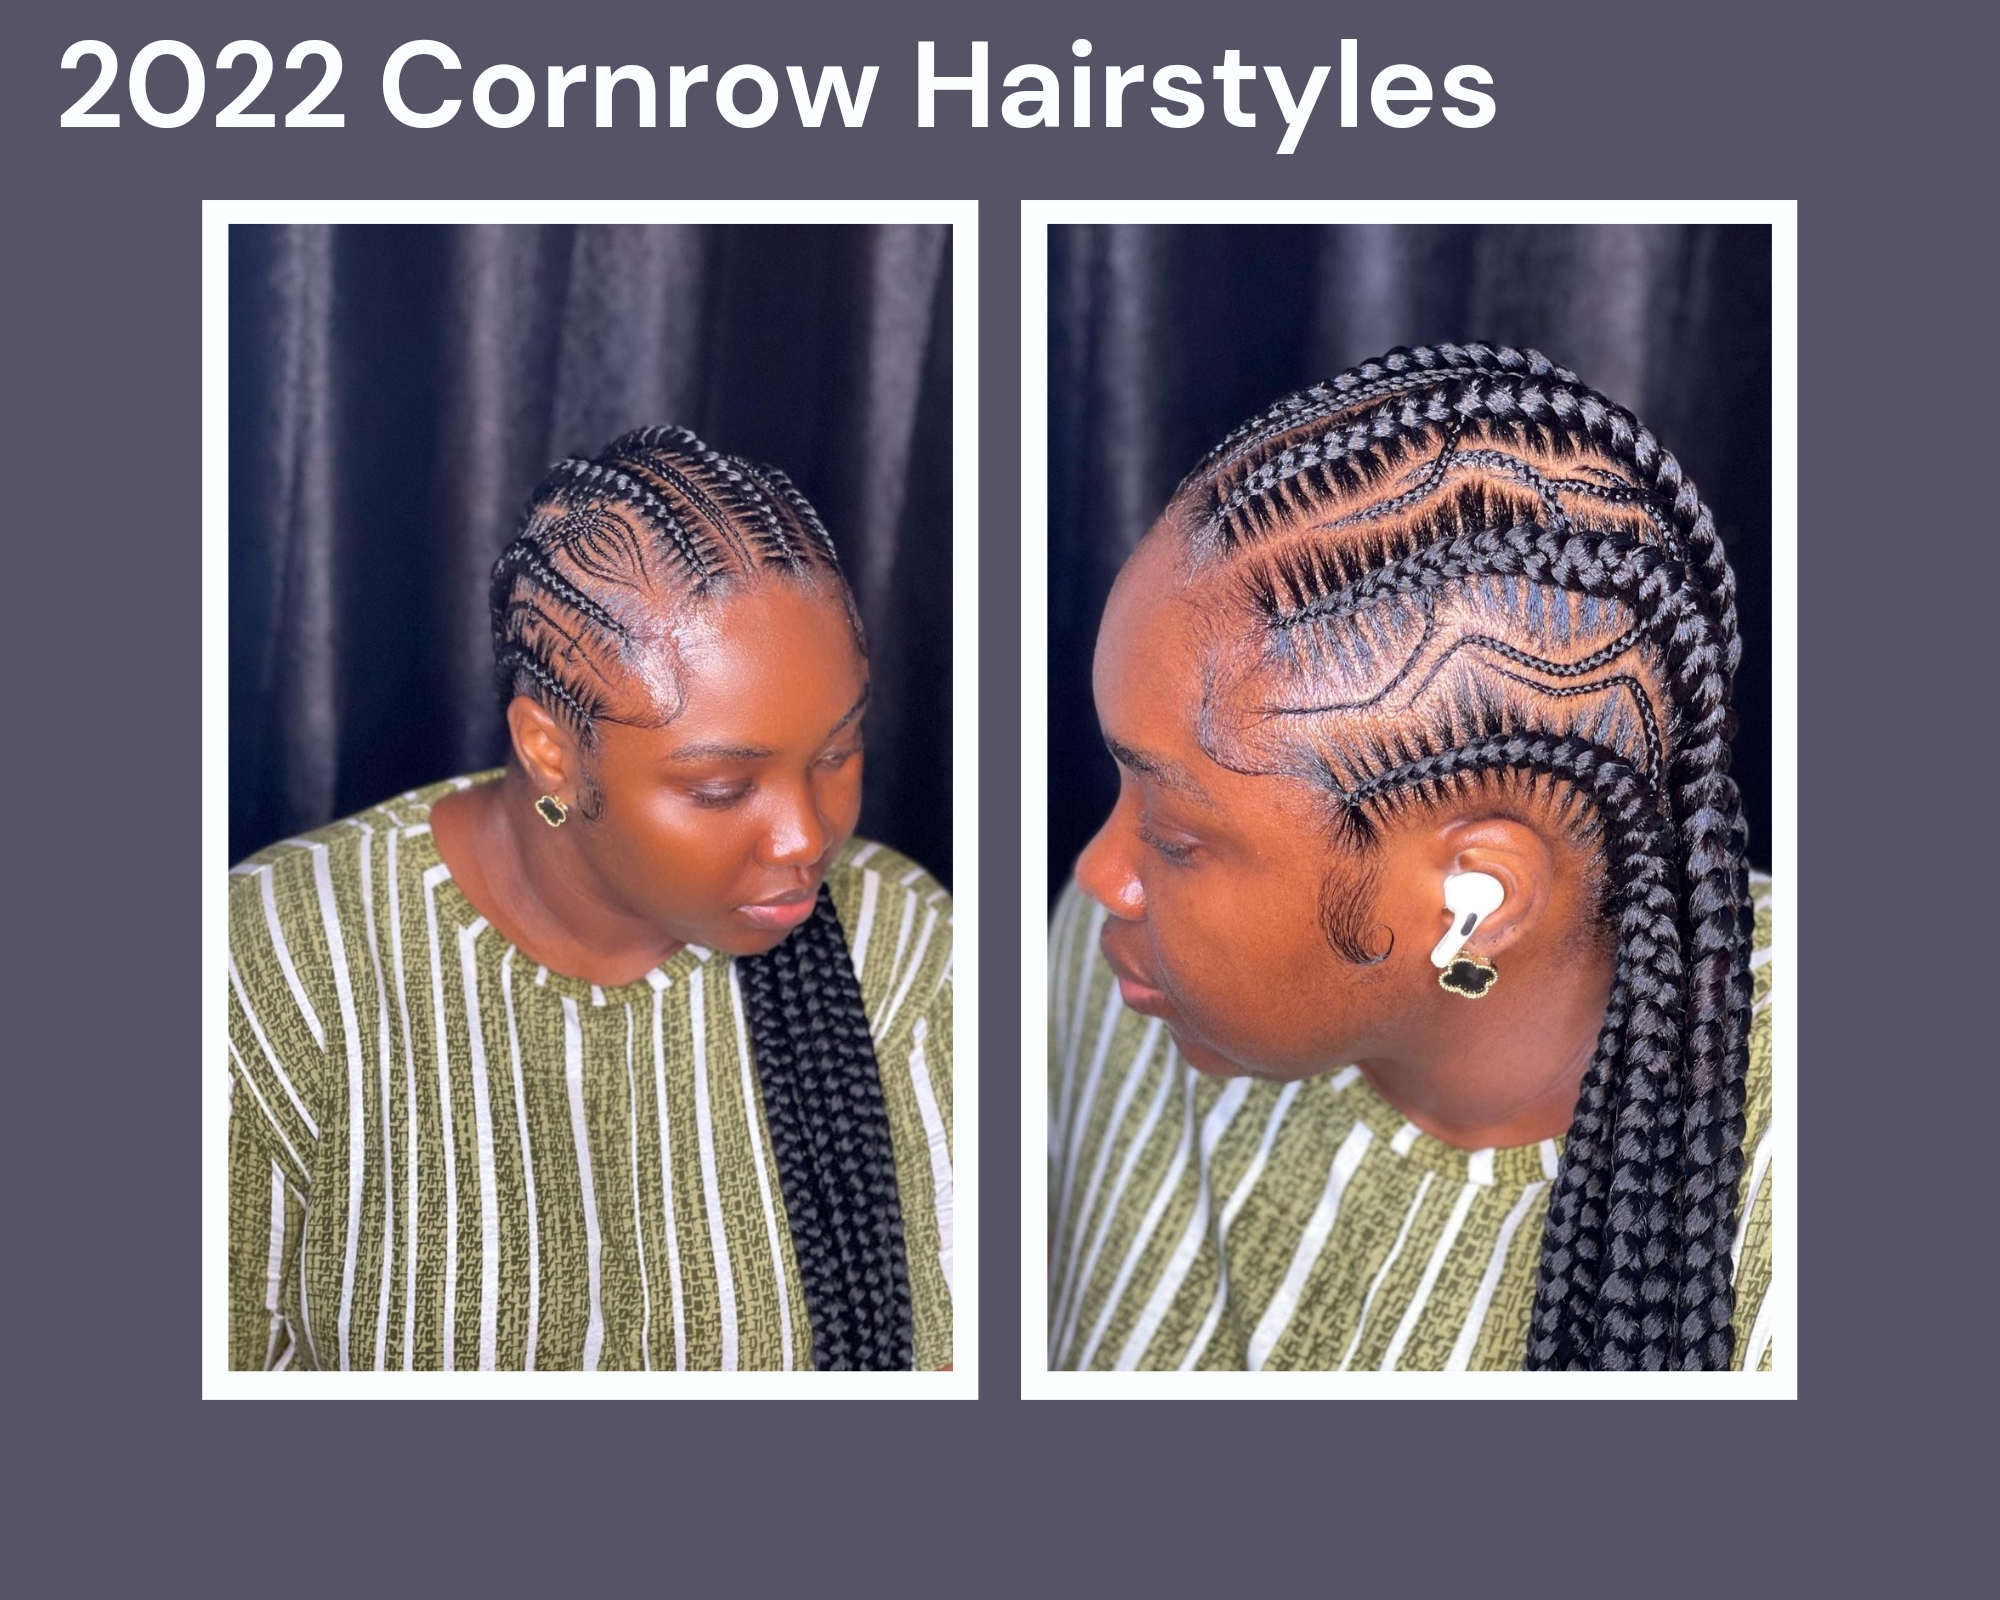 Cornrow hairstyle